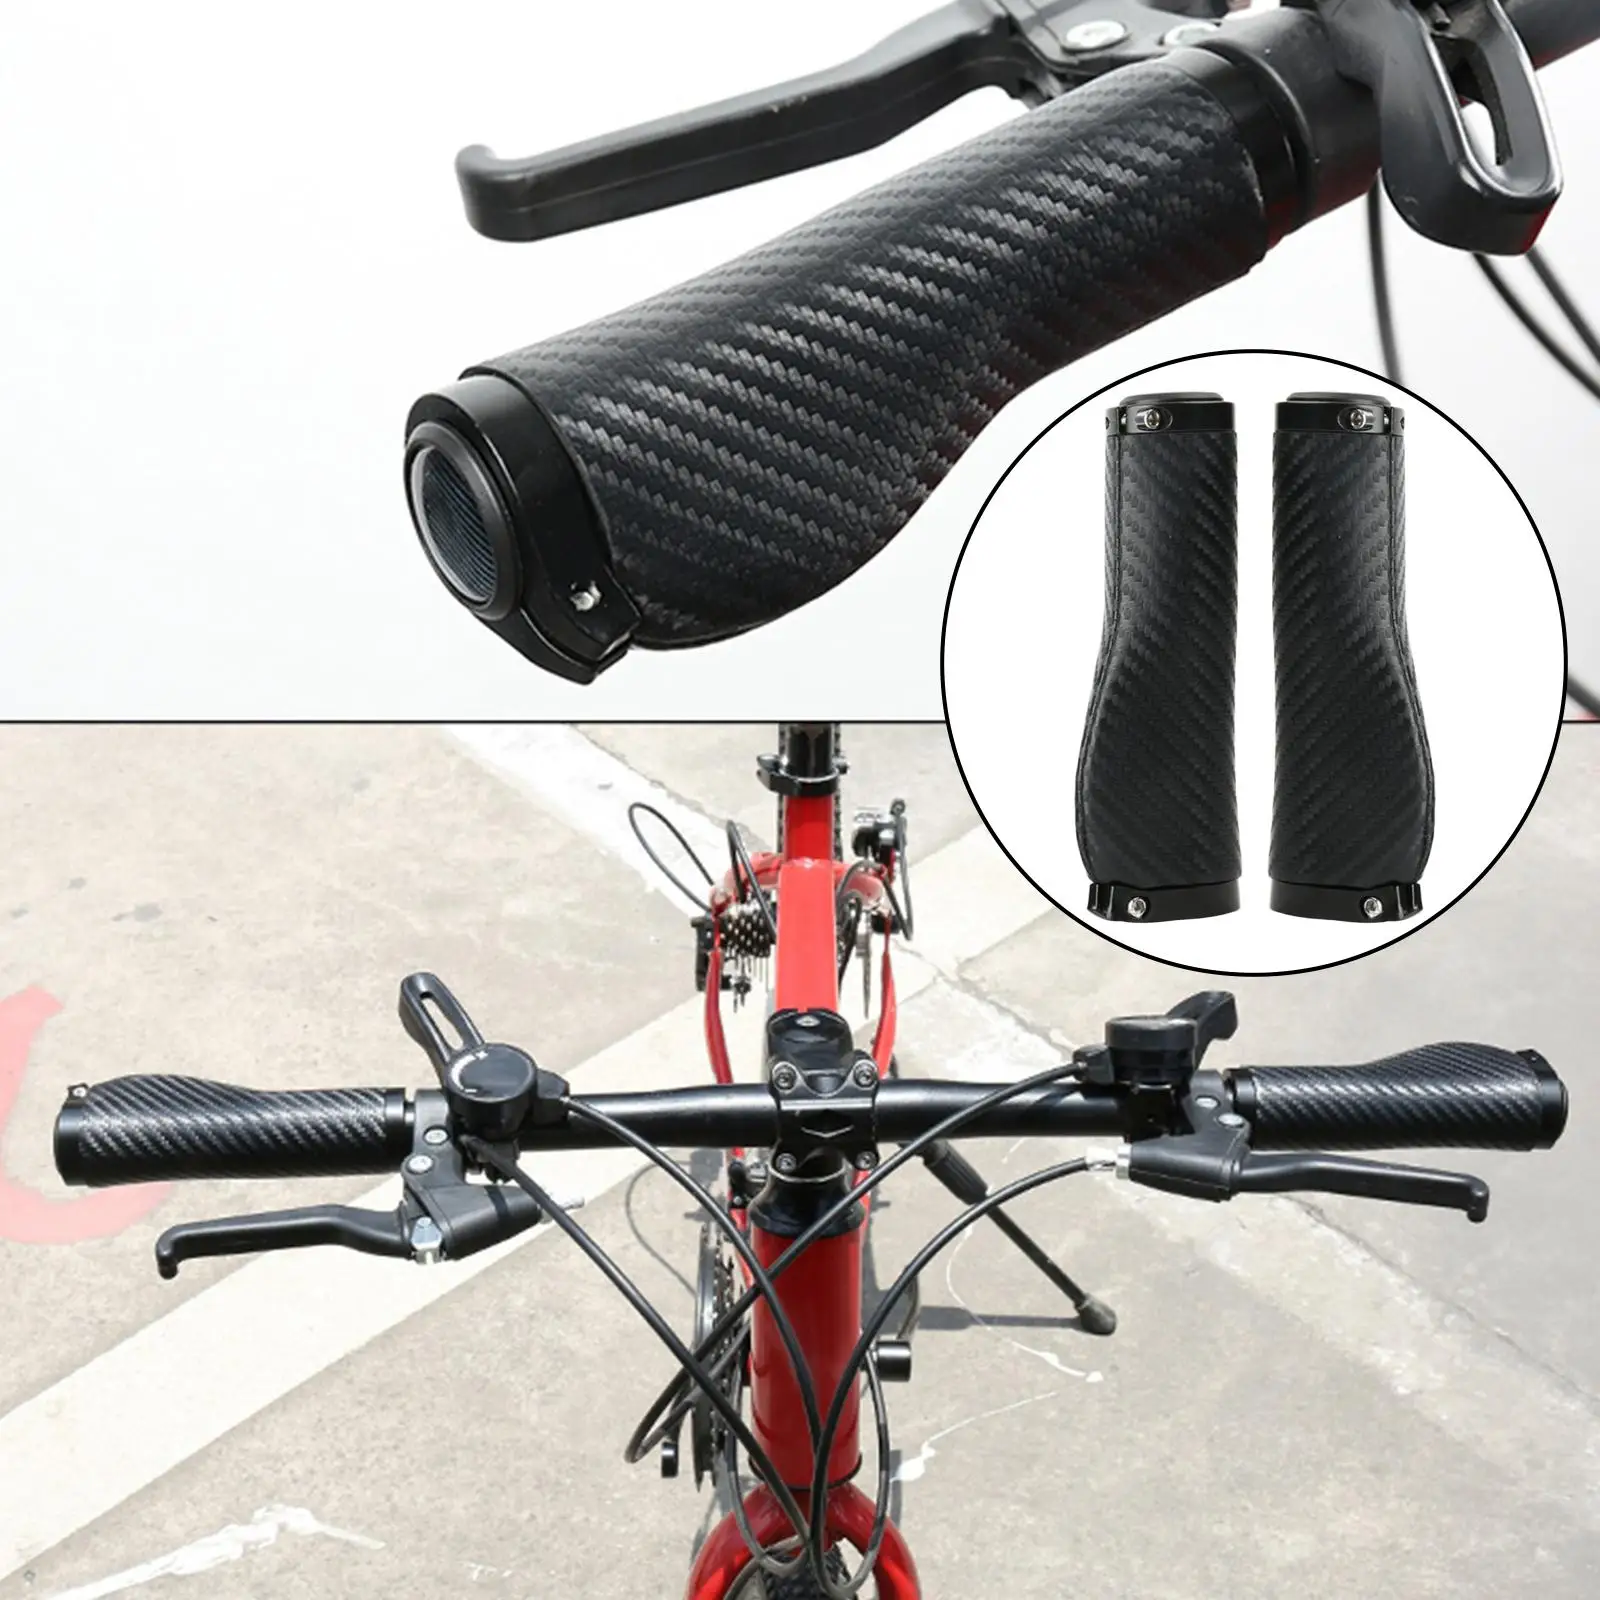 2x PU Plastic Bicycle Handlebar Grips Lock On Ergonomic Bar Grips for Mountain Bikes E Bike Scooter Bicycle Grips Riding